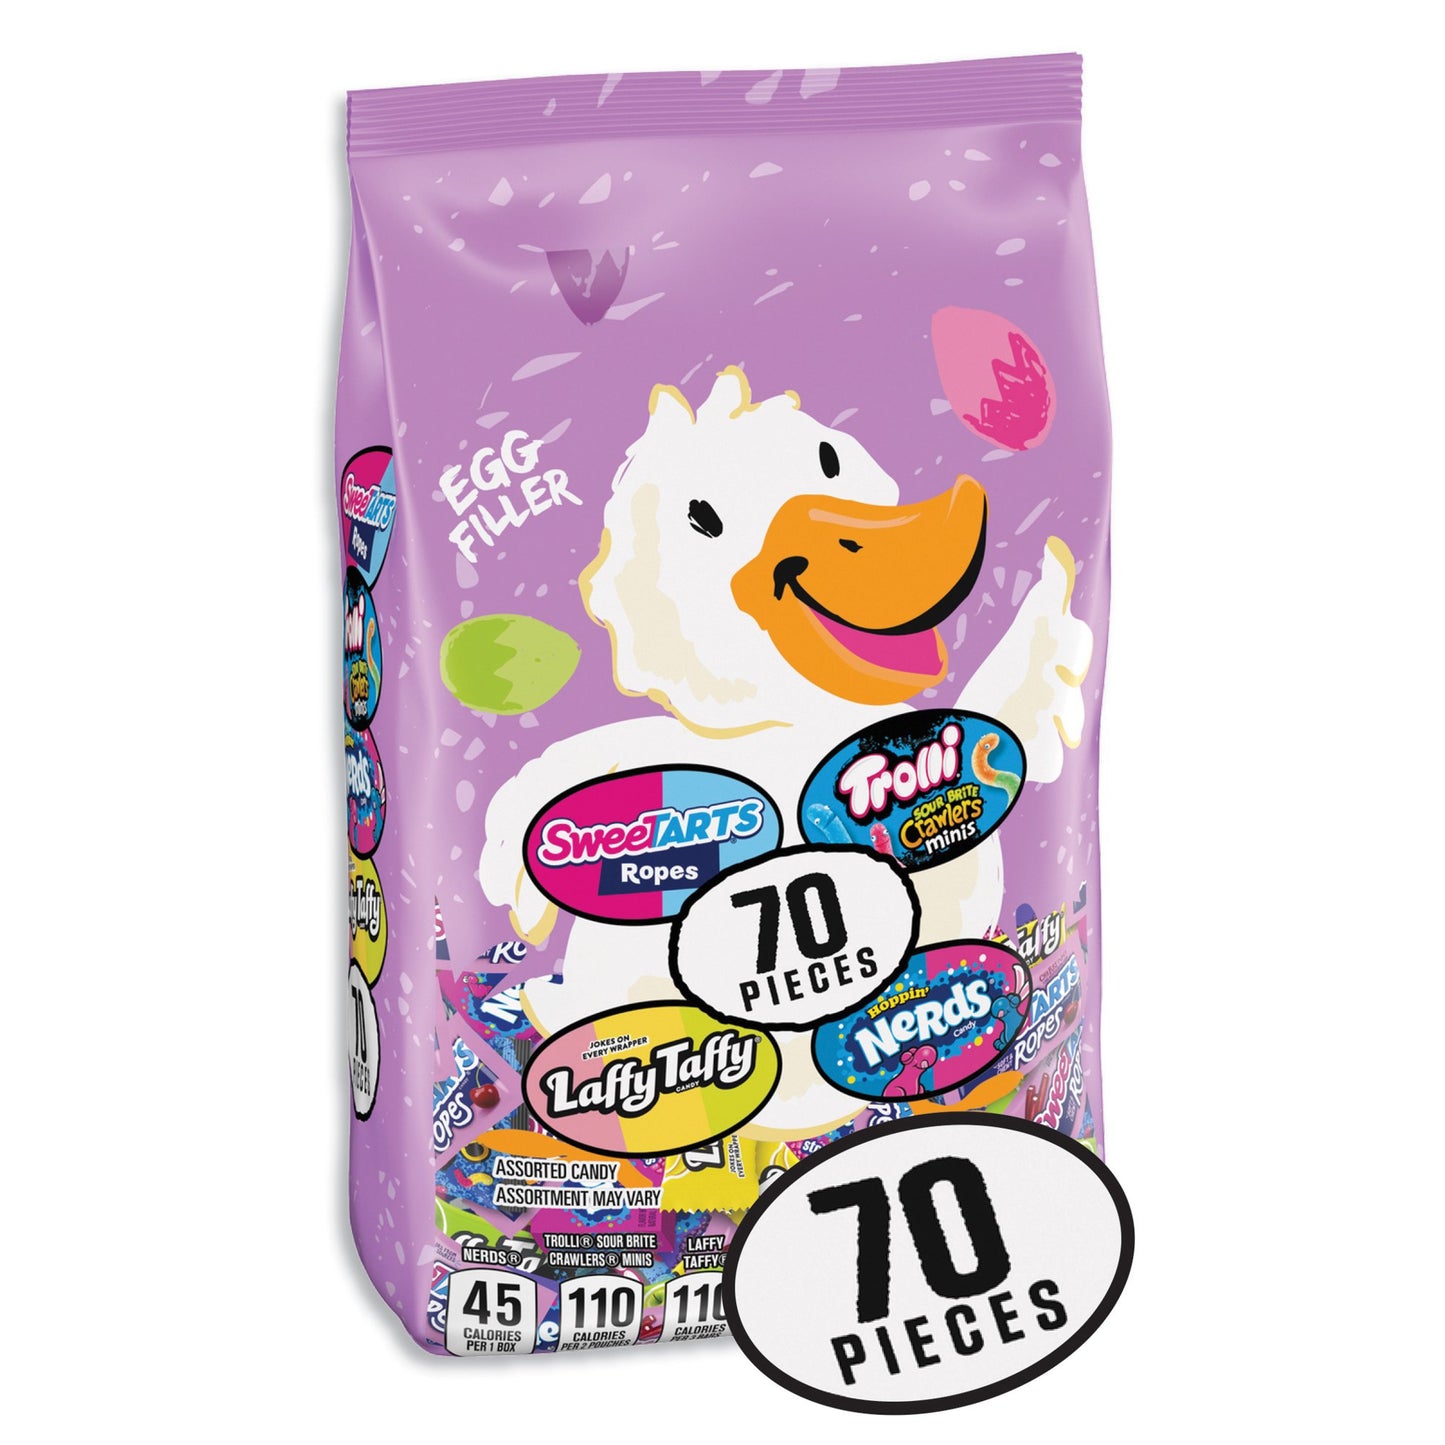 Easter Premium Egg Filler Duck Mix Fruit Flavored Trolli Candy Assortment 28.9oz, 70 Count